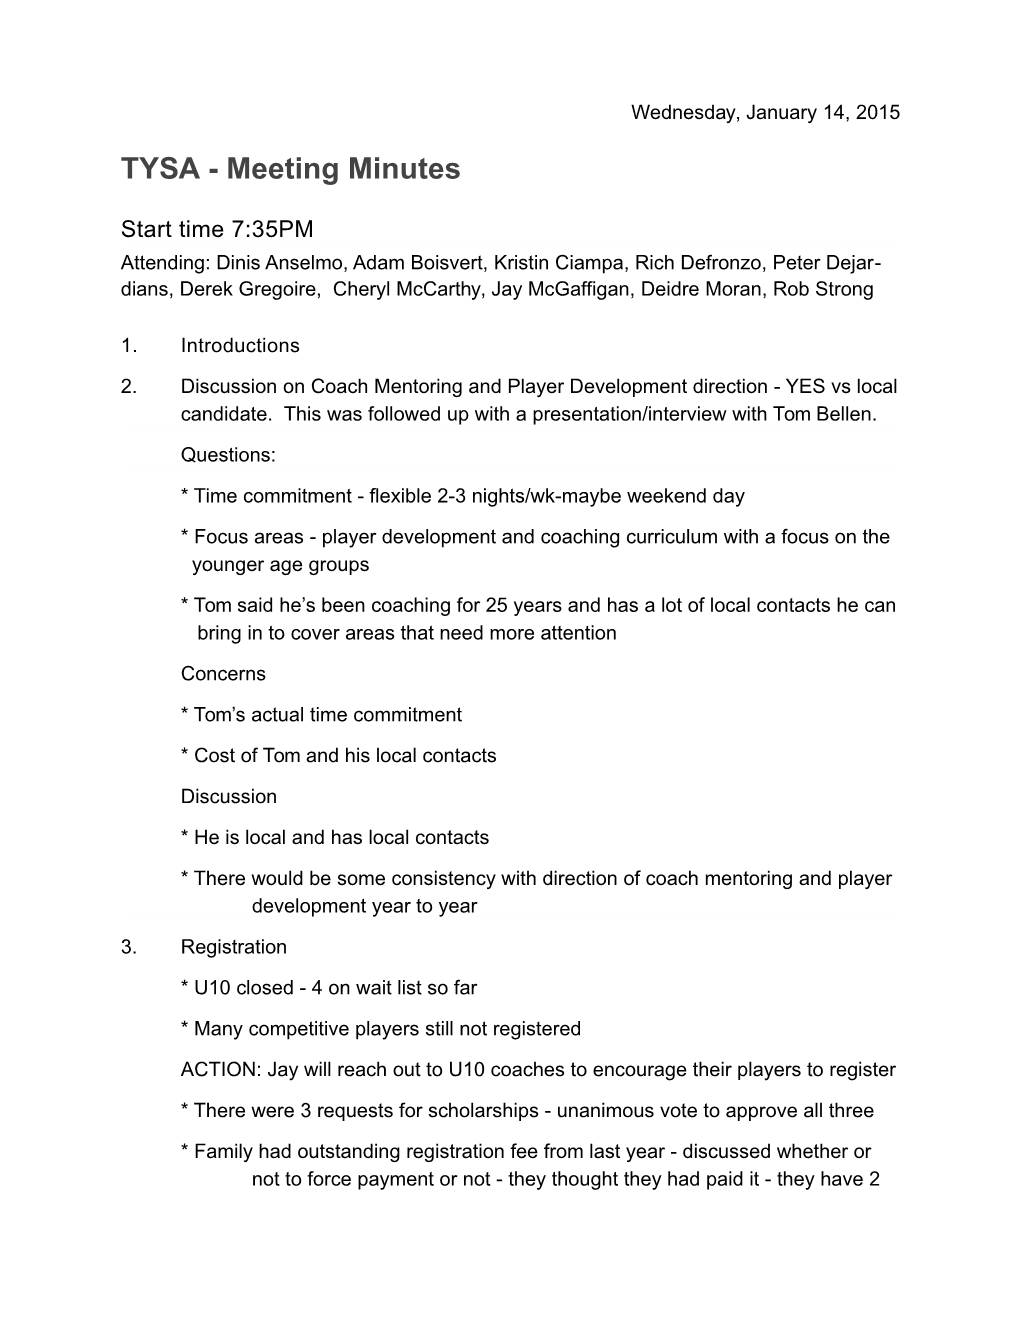 TYSA - Meeting Minutes